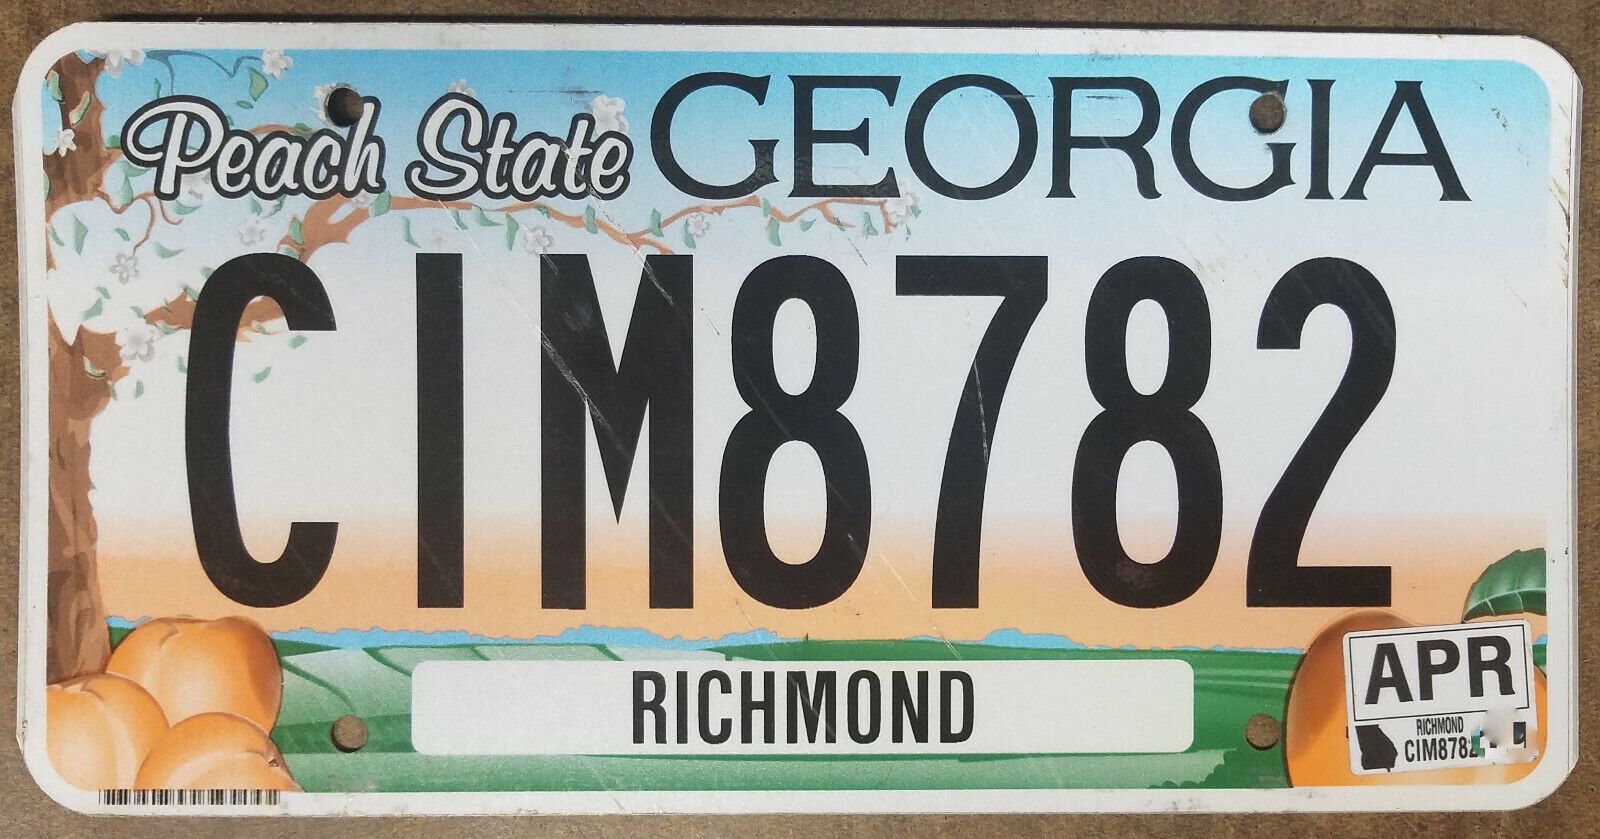 Georgia expired 2010? Peach State Richmond County License Plate ~ CIM8782 - Flat